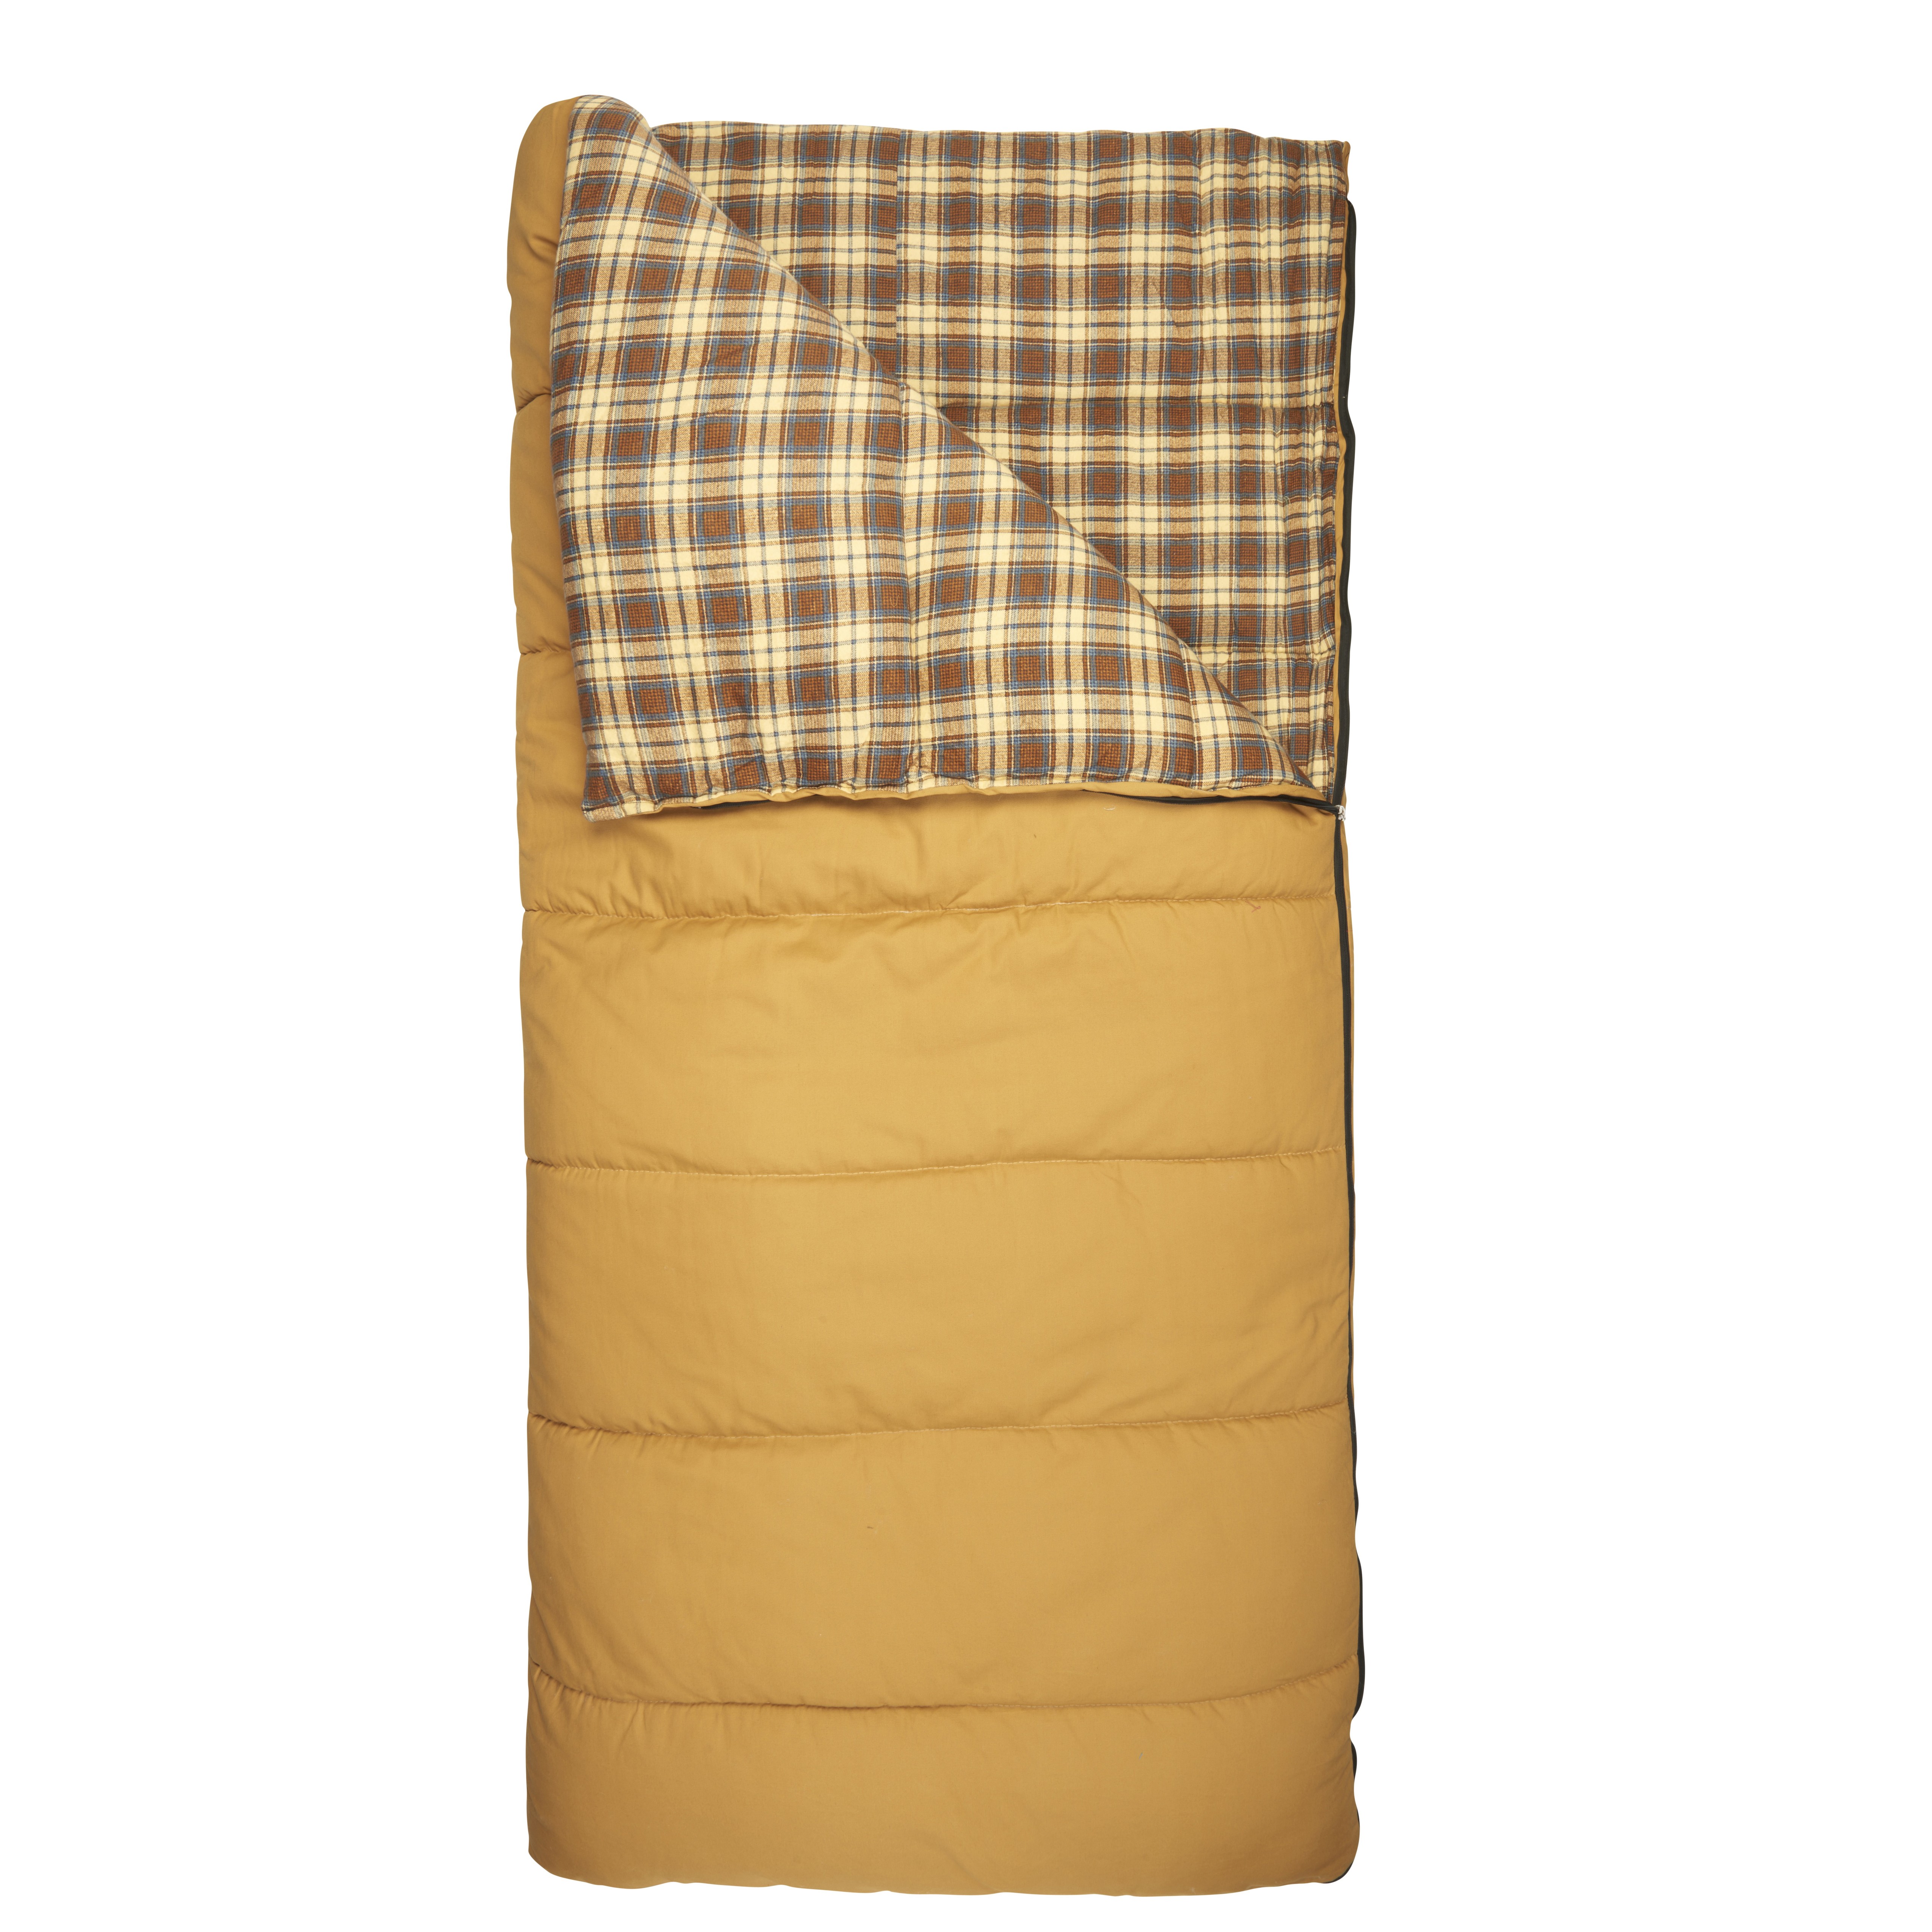 SJK North Fork 10/20 sleeping bag, tan, shown partially unzipped